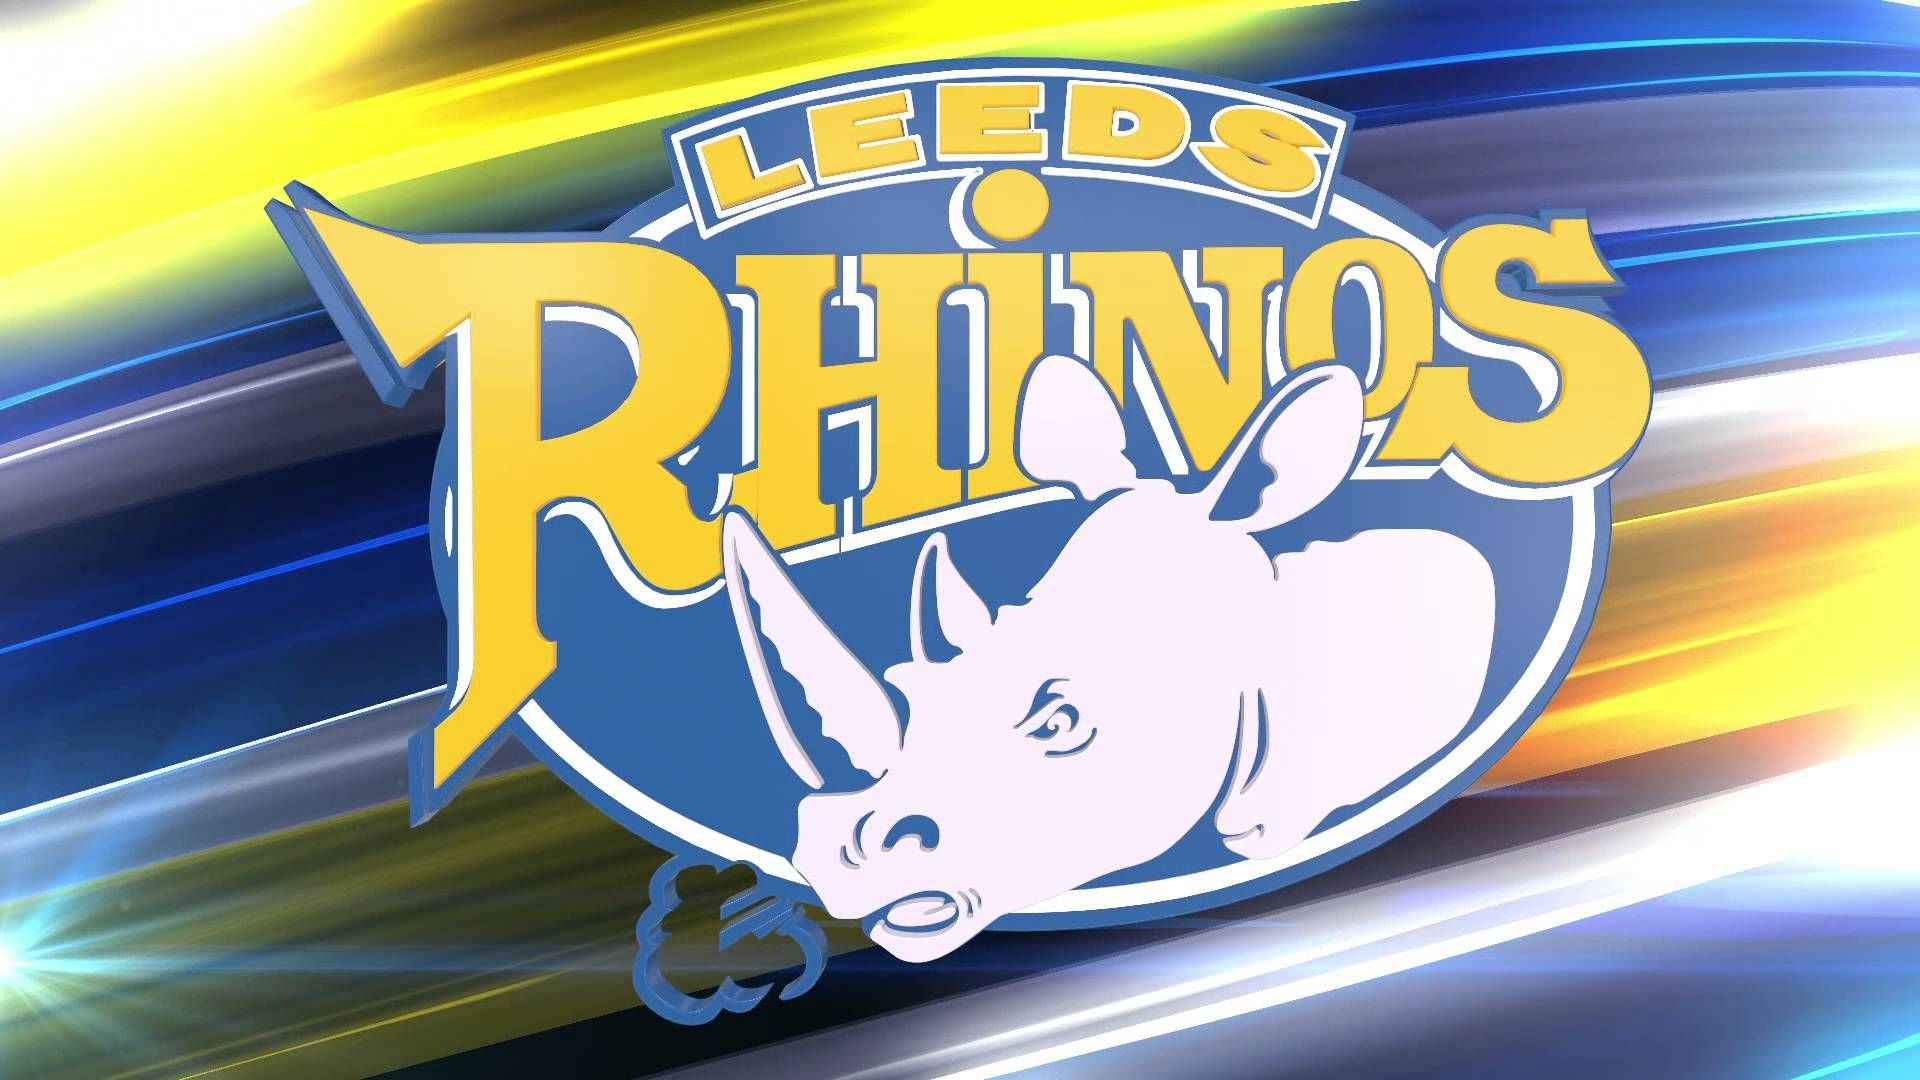 Rugby League: The Leeds Rhinos' official logo, An English professional gridiron football club. 1920x1080 Full HD Wallpaper.